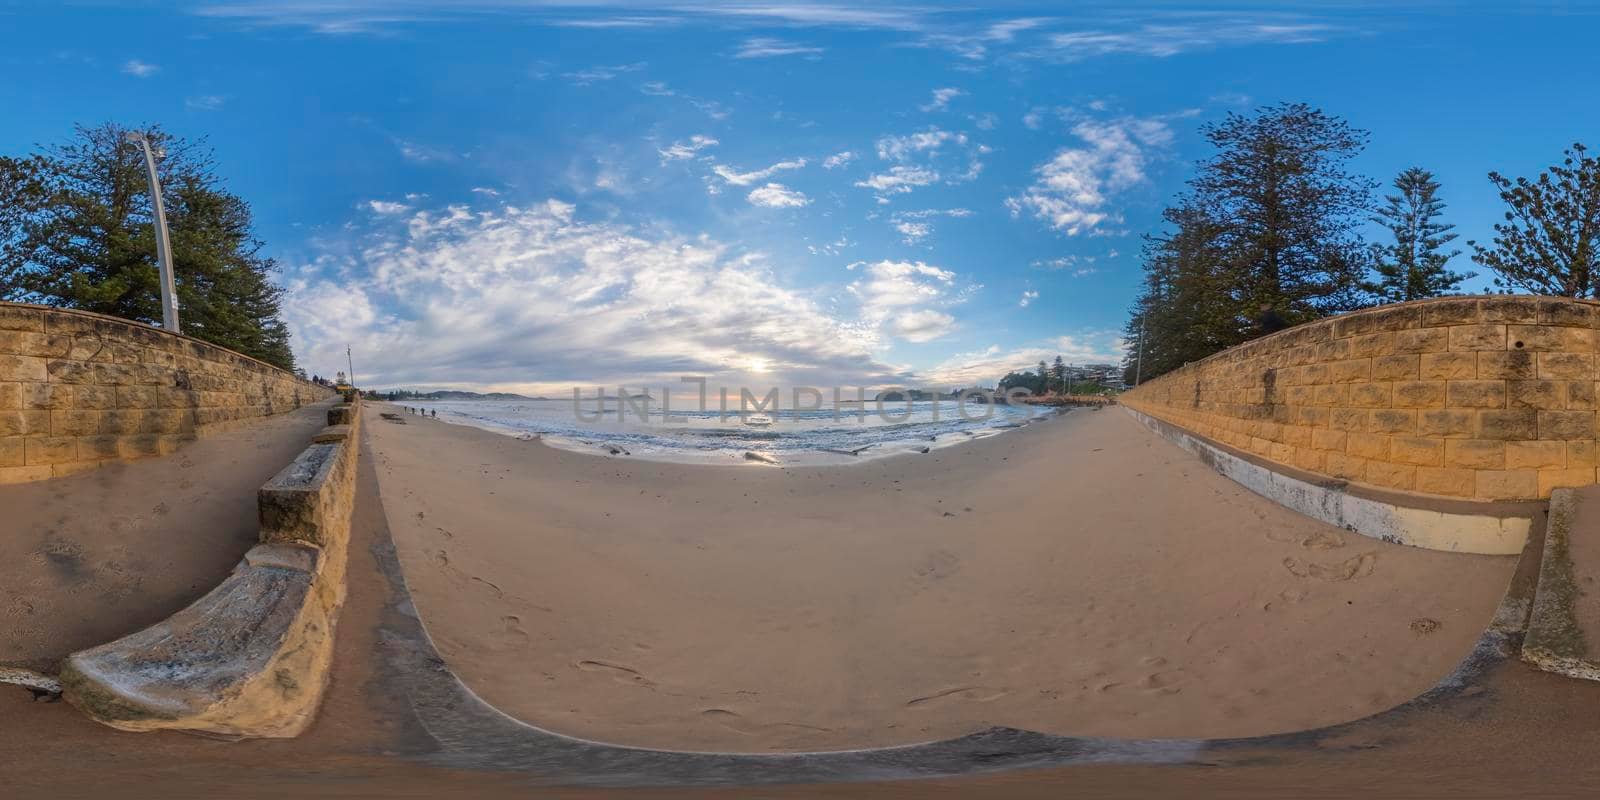 Spherical panoramic photograph of Terrigal beach in regional Australia by WittkePhotos